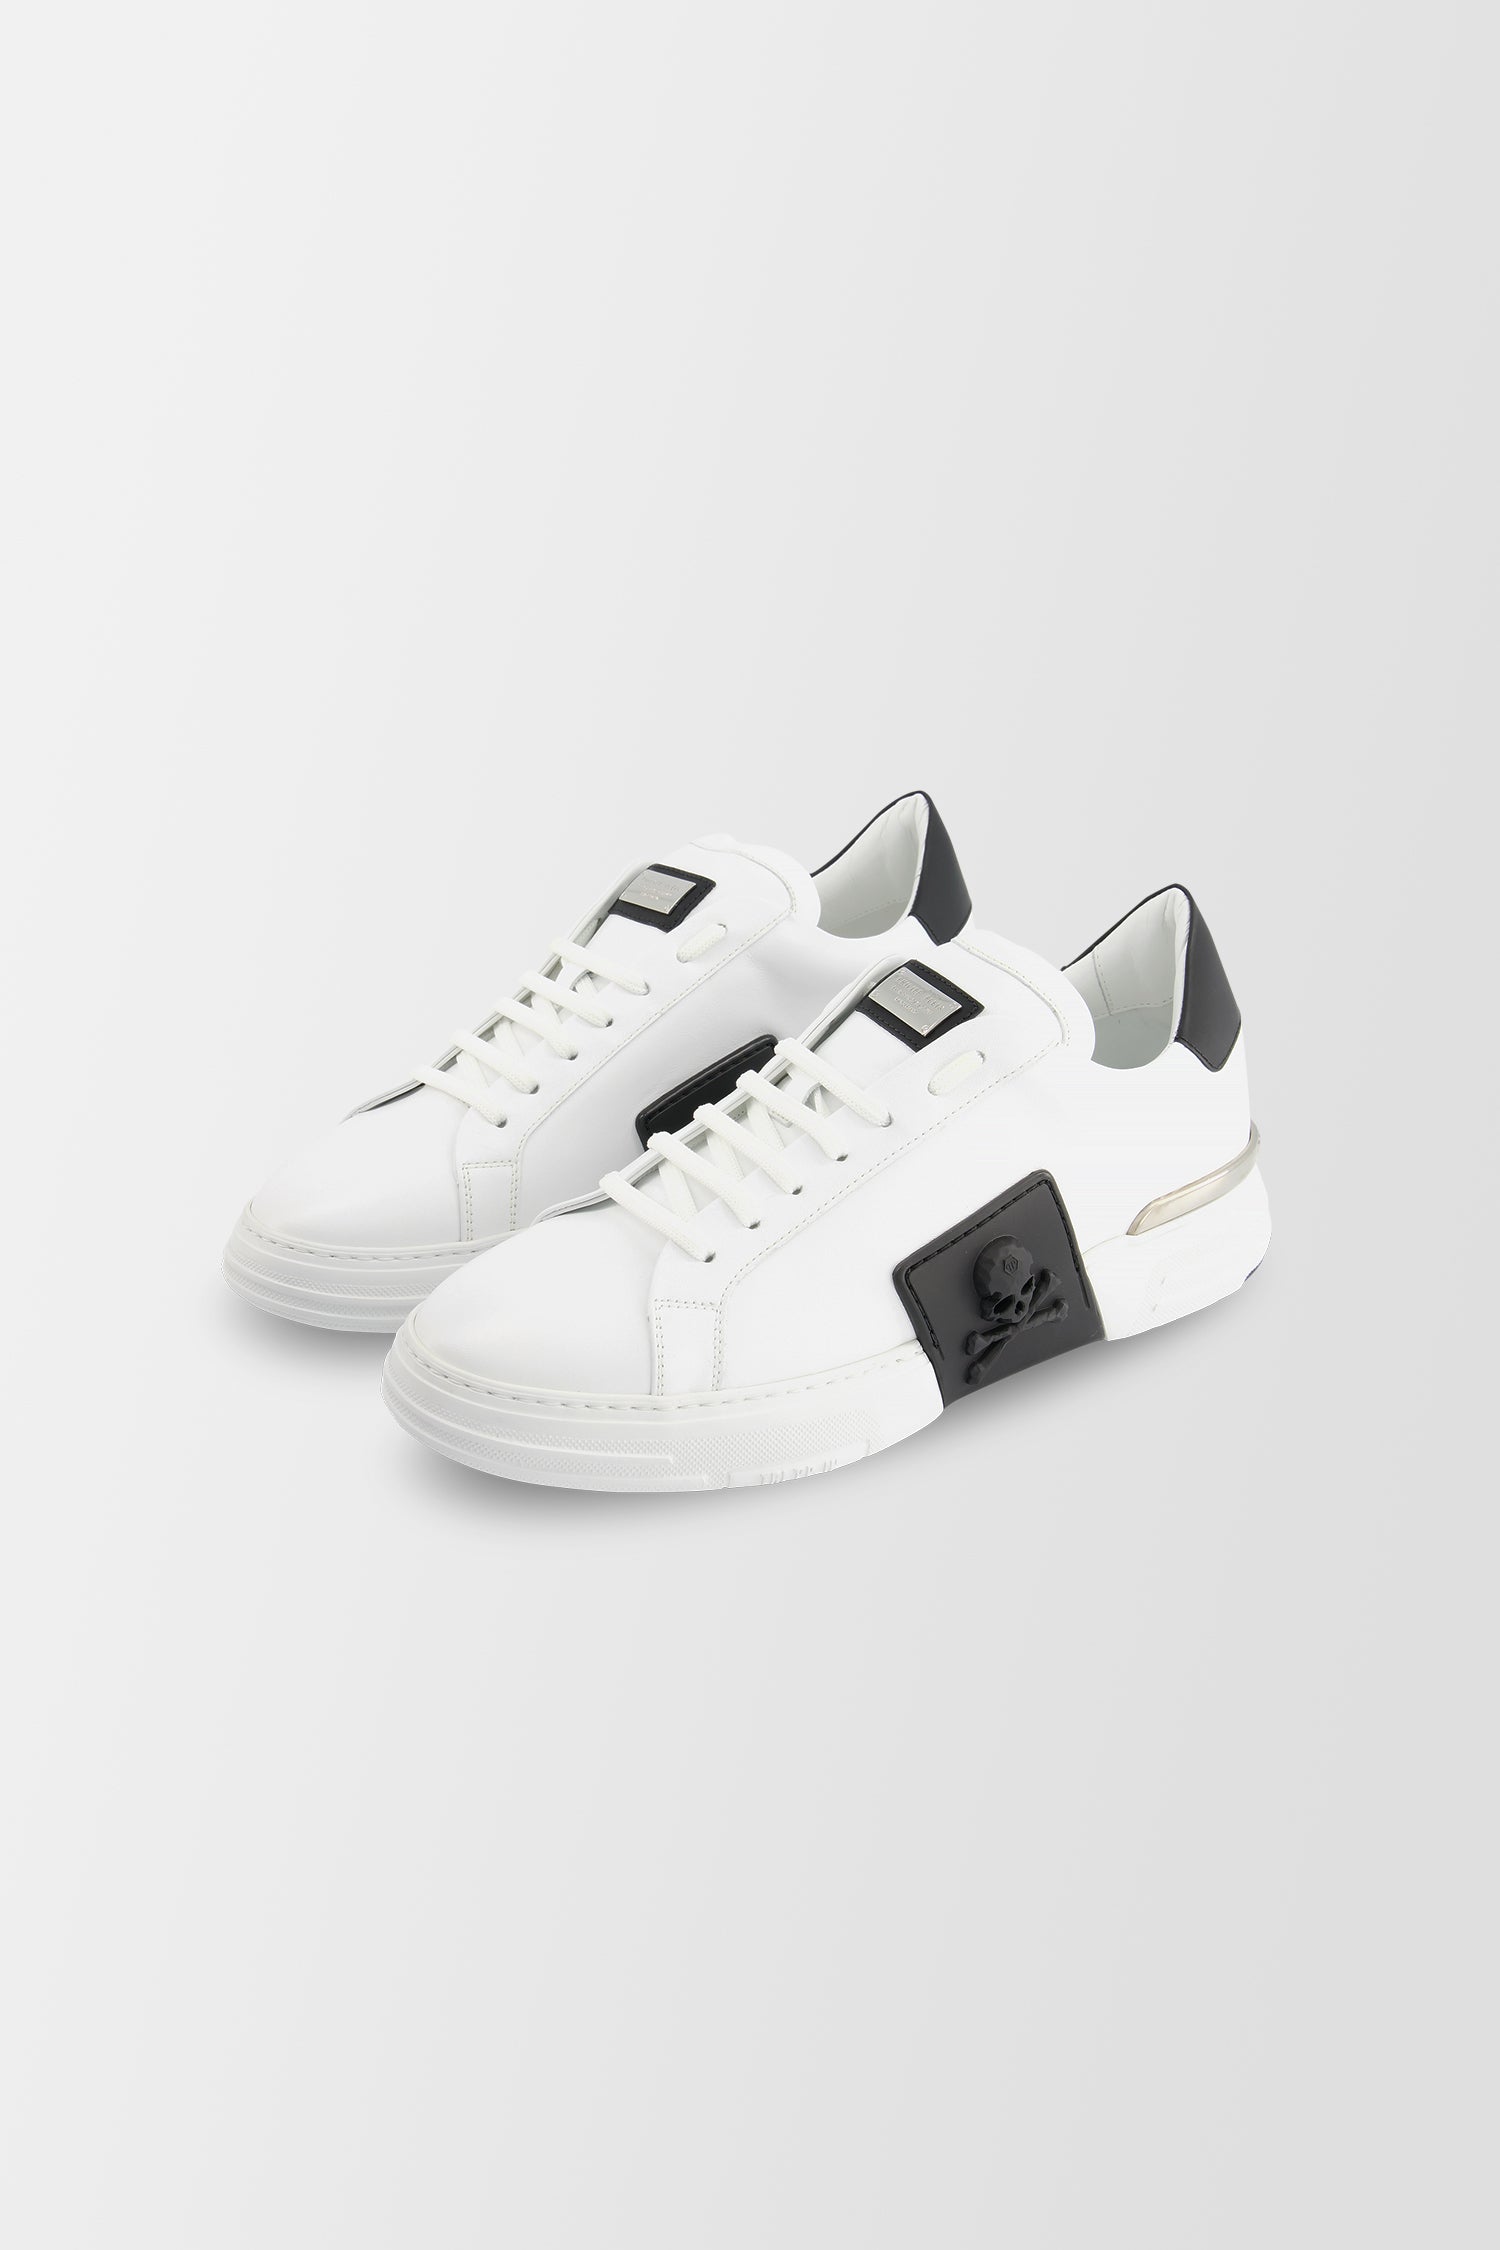 Philipp Plein Black/Multi Gothic Plein Hghi-top Sock Sneakers, Brand Size  41 ( US Size 8 ) A18S MSC1671 PTE074N 02 - Shoes - Jomashop